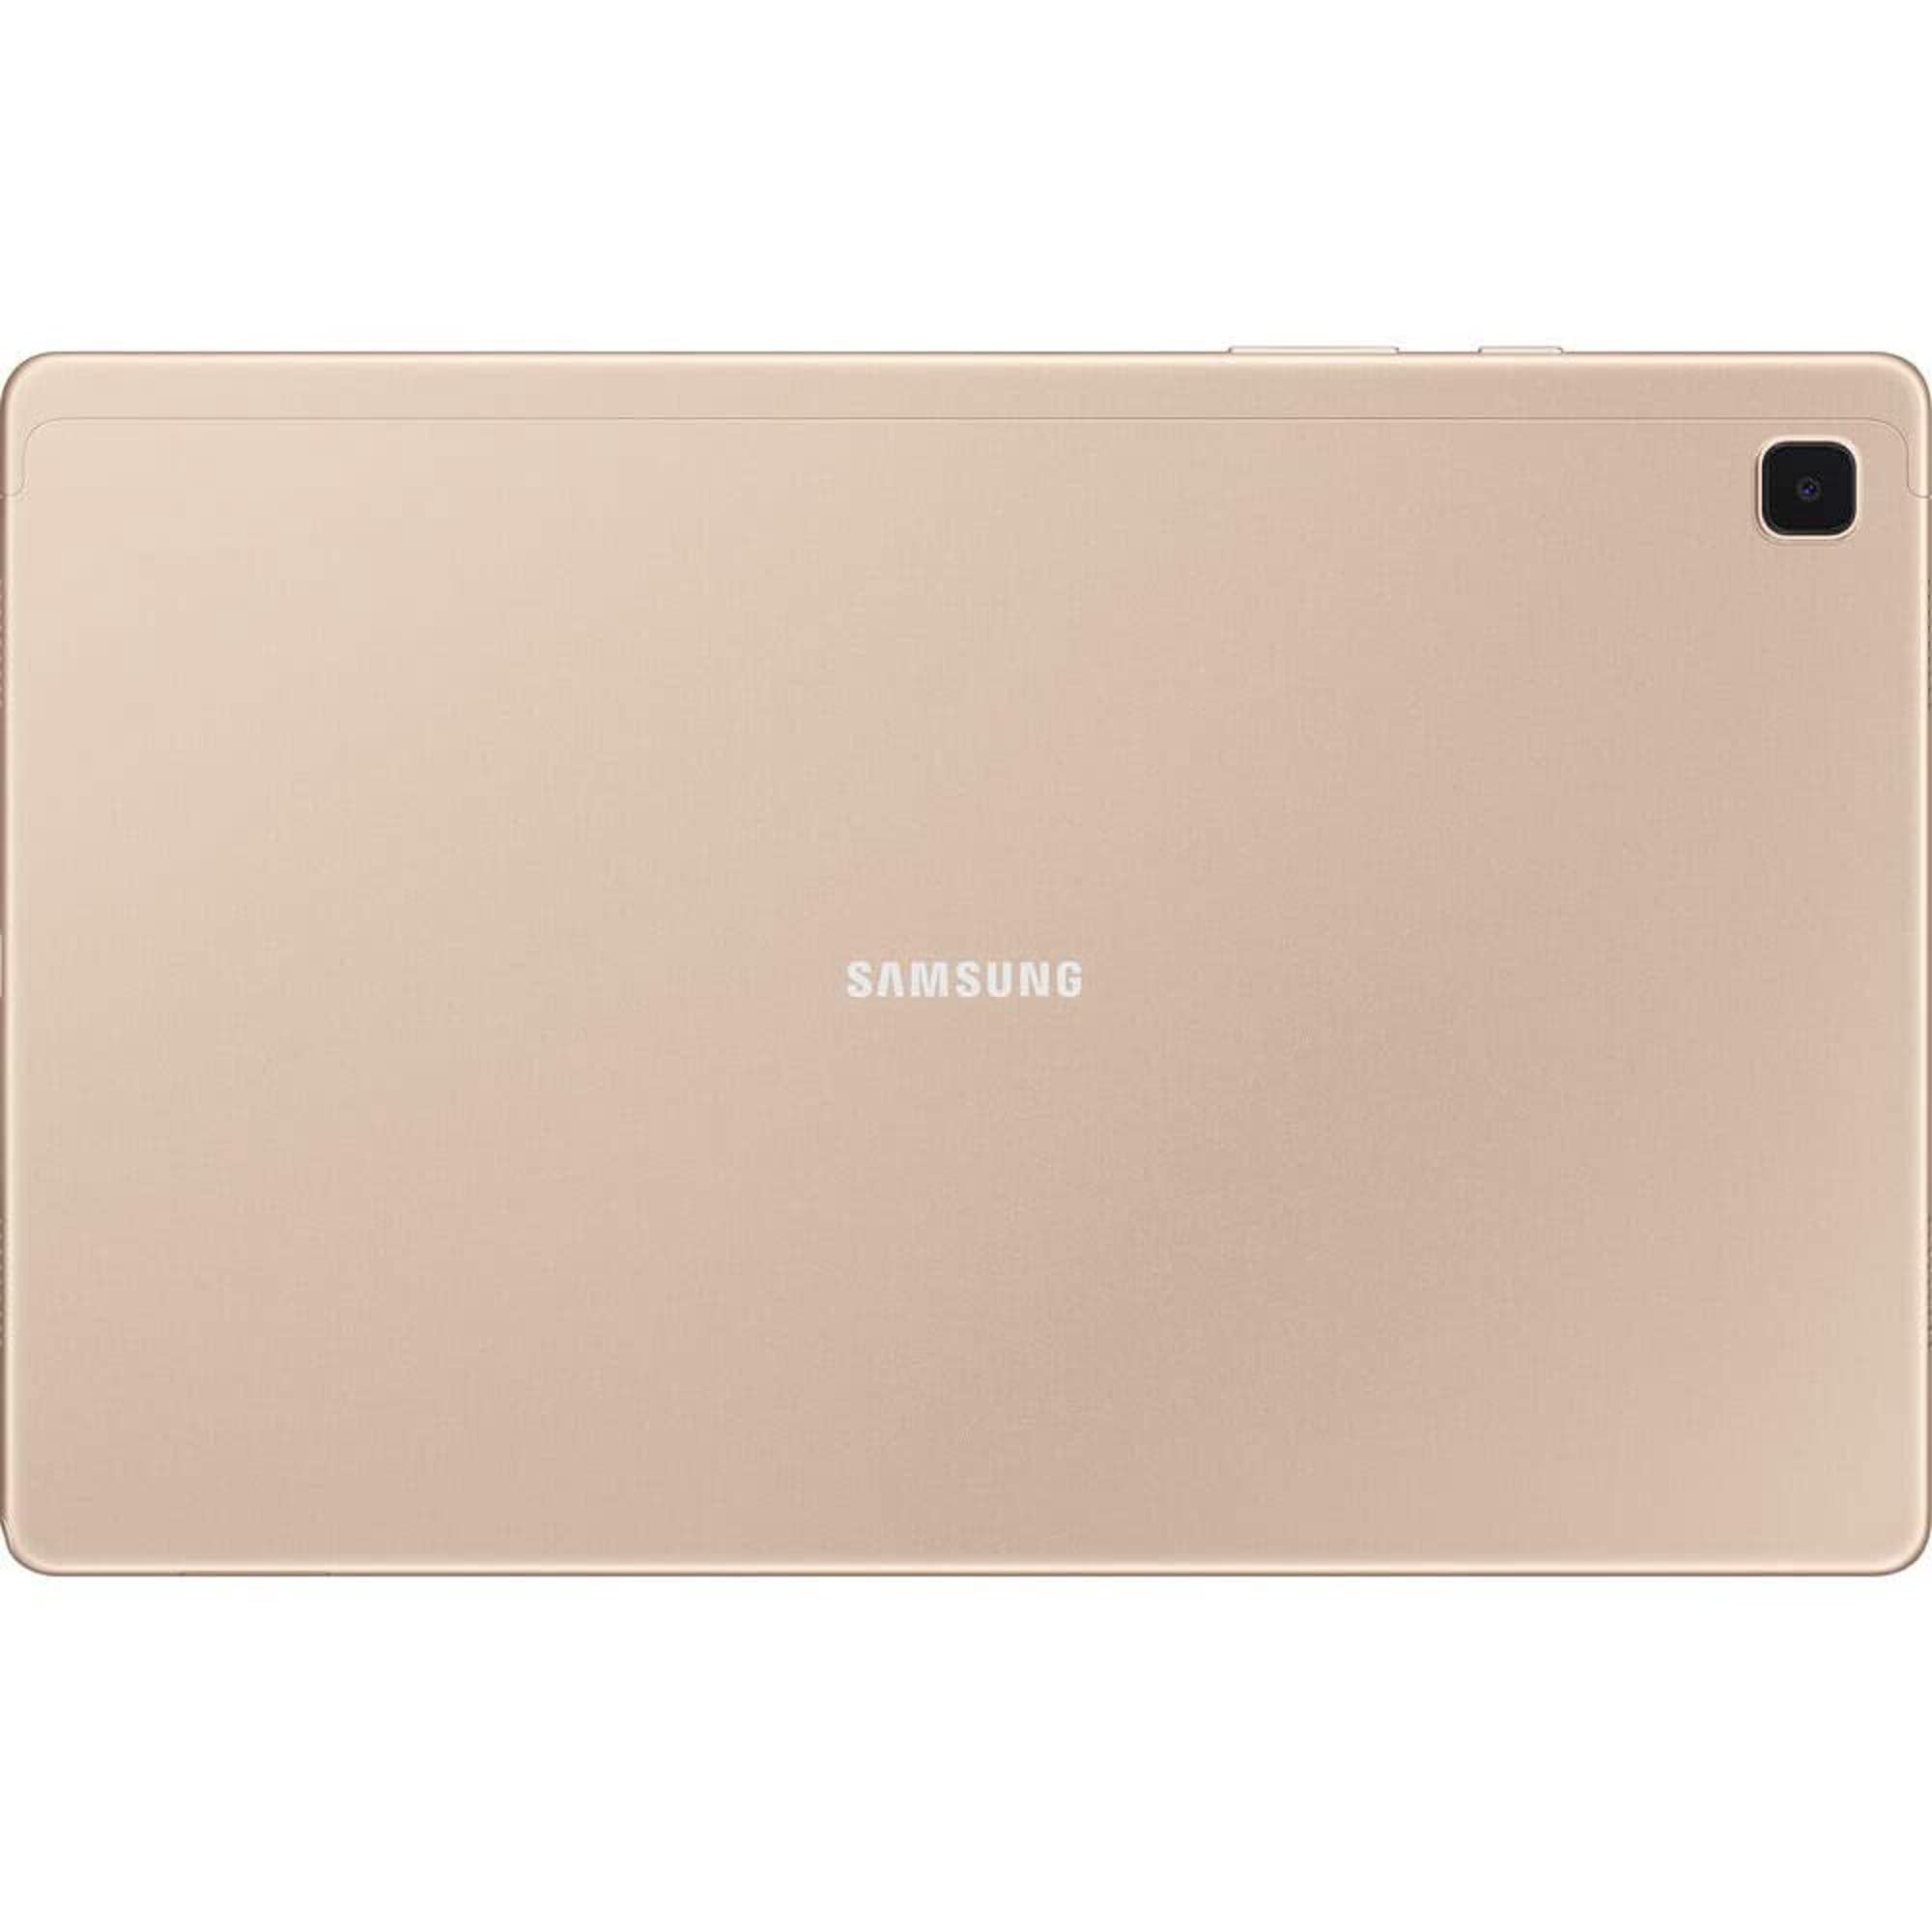 SAMSUNG Galaxy Tab A7 10.4'' (2000x1200) TFT Display Wi-Fi Tablet Bundle, 3GB RAM, 64GB Storage, Bluetooth, Android 10 OS, Gold + Accessories